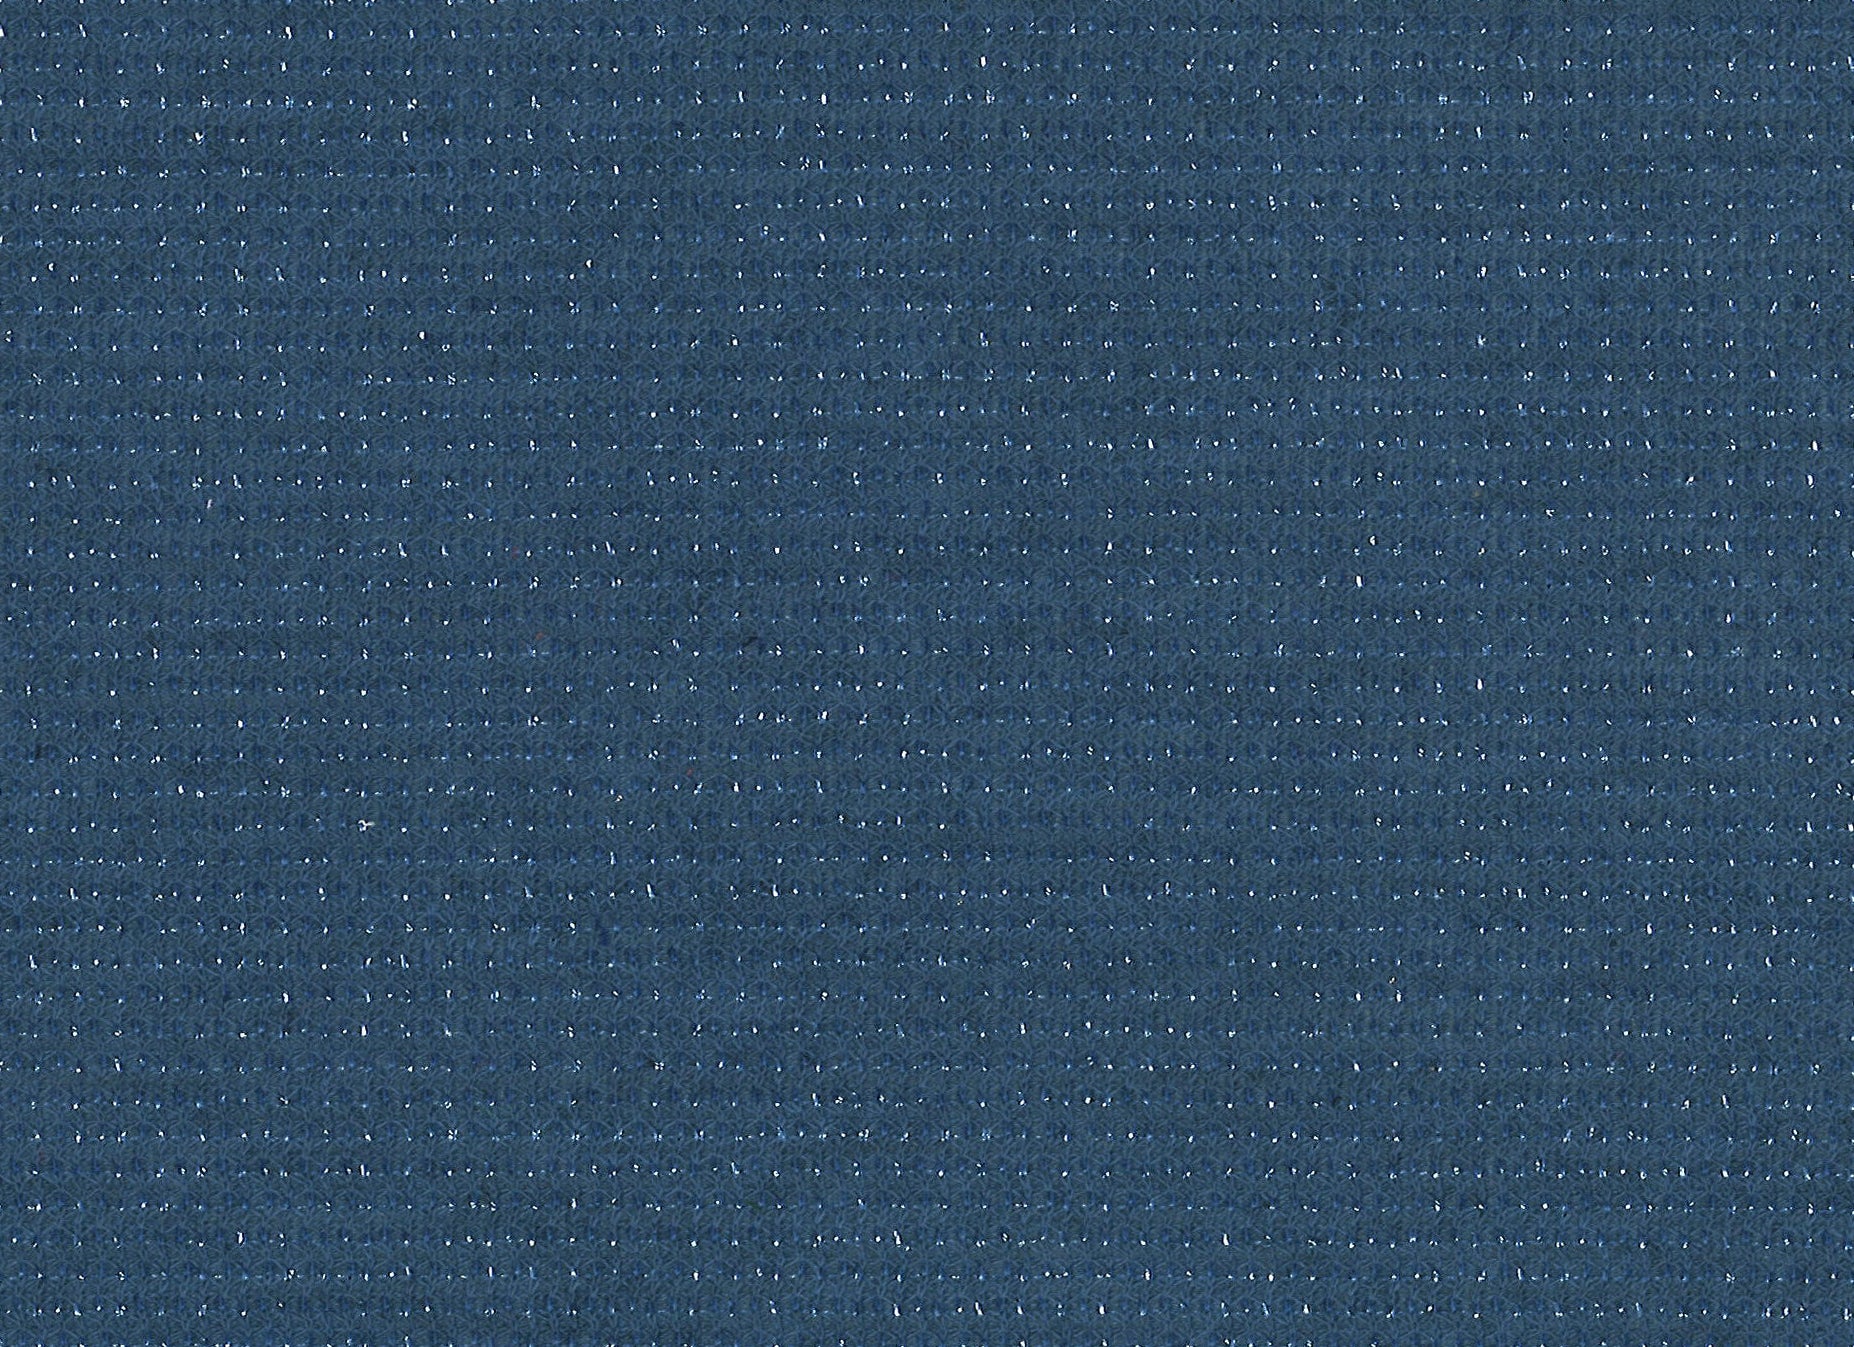 18009-04 56" 240g/yd Metallic Plain Dyed Blend Knit blend blue knit metallic plain dyed polyester Metallic - knit fabric - woven fabric - fabric company - fabric wholesale - fabric b2b - fabric factory - high quality fabric - hong kong fabric - fabric hk - acetate fabric - cotton fabric - linen fabric - metallic fabric - nylon fabric - polyester fabric - spandex fabric - chun wing hing - cwh hk - fabric worldwide ship - 針織布 - 梳織布 - 布料公司- 布料批發 - 香港布料 - 秦榮興